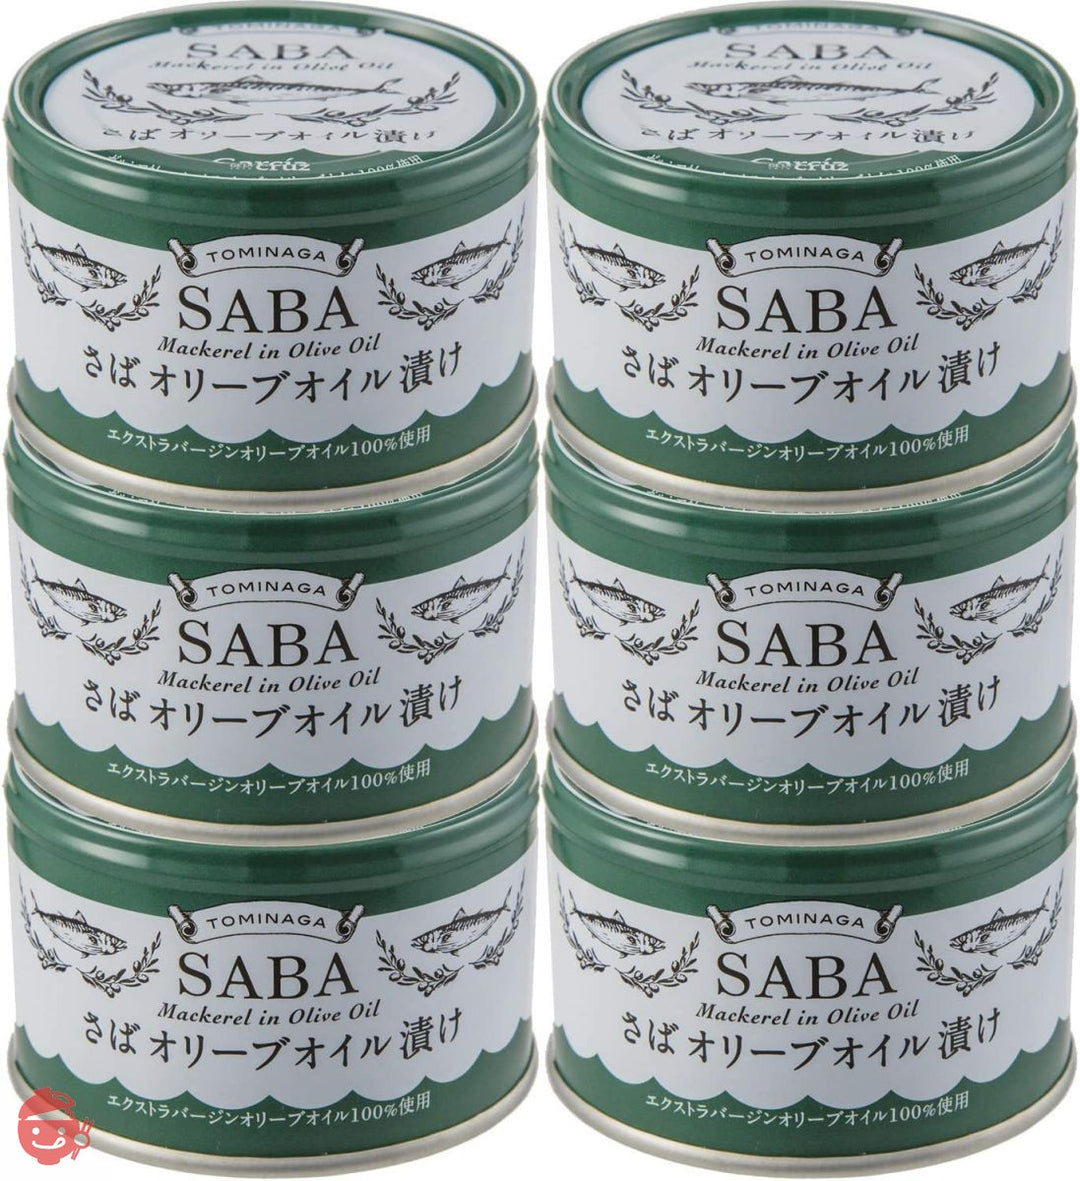 TOMINAGA SABA オリーブオイル漬け プレーン 缶詰 150g × 6個 [ さば缶 ガルシア エクストラバージンオリーブオイル 使用 ]の画像